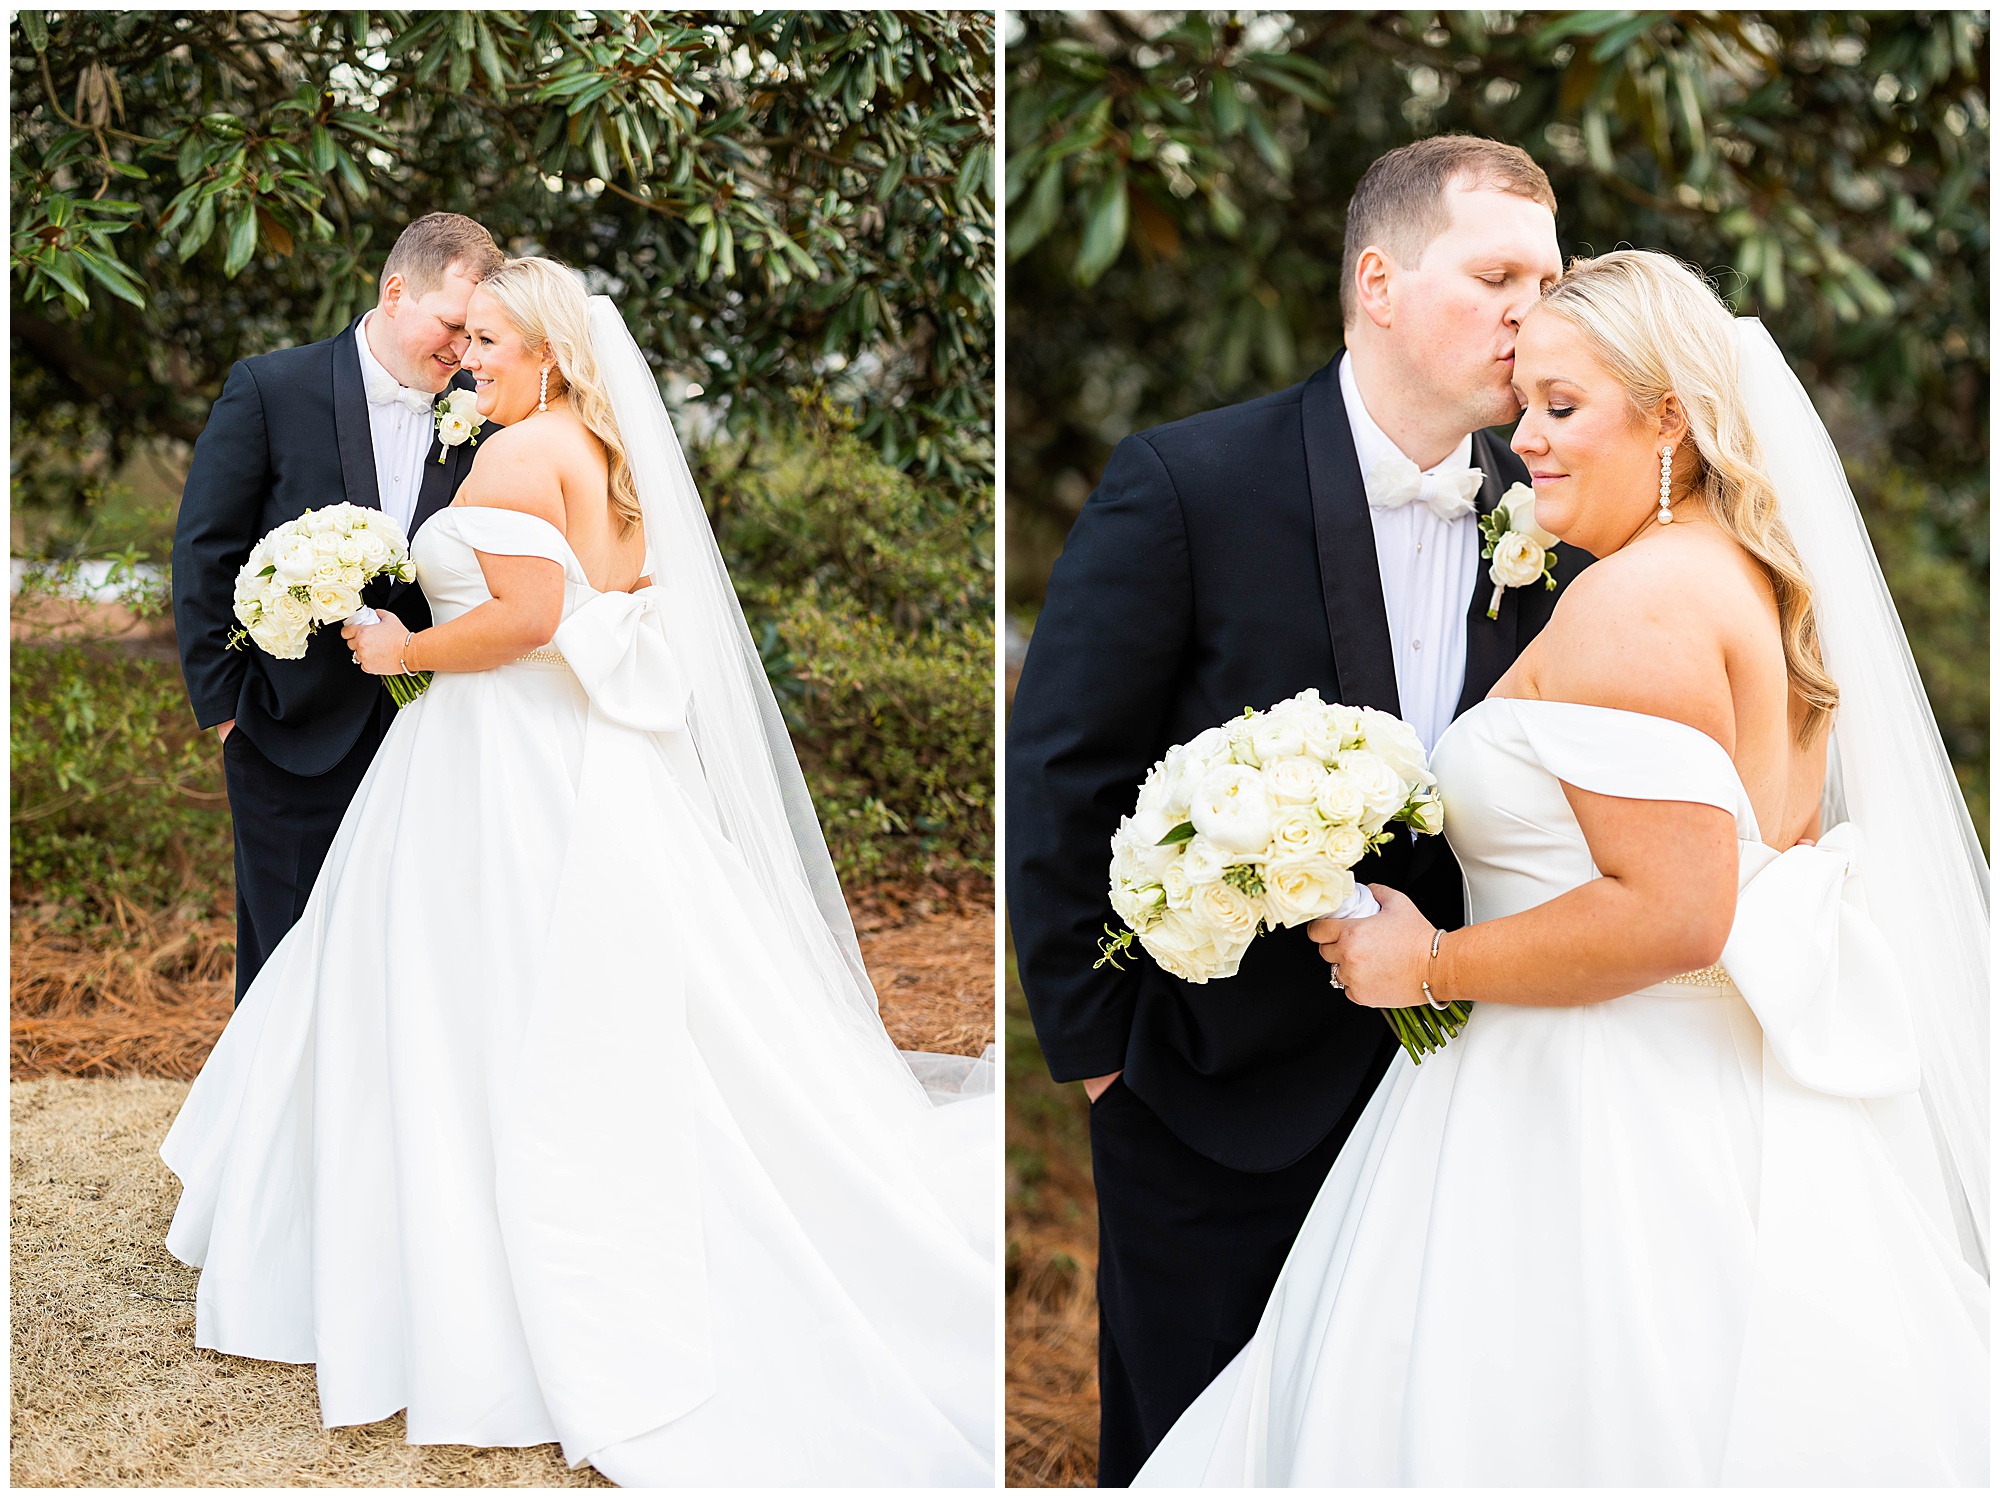 Eleanor Stenner Photography - a Birmingham, Alabama Wedding Photographer - photographs the Leake wedding in Birmingham, Alabama